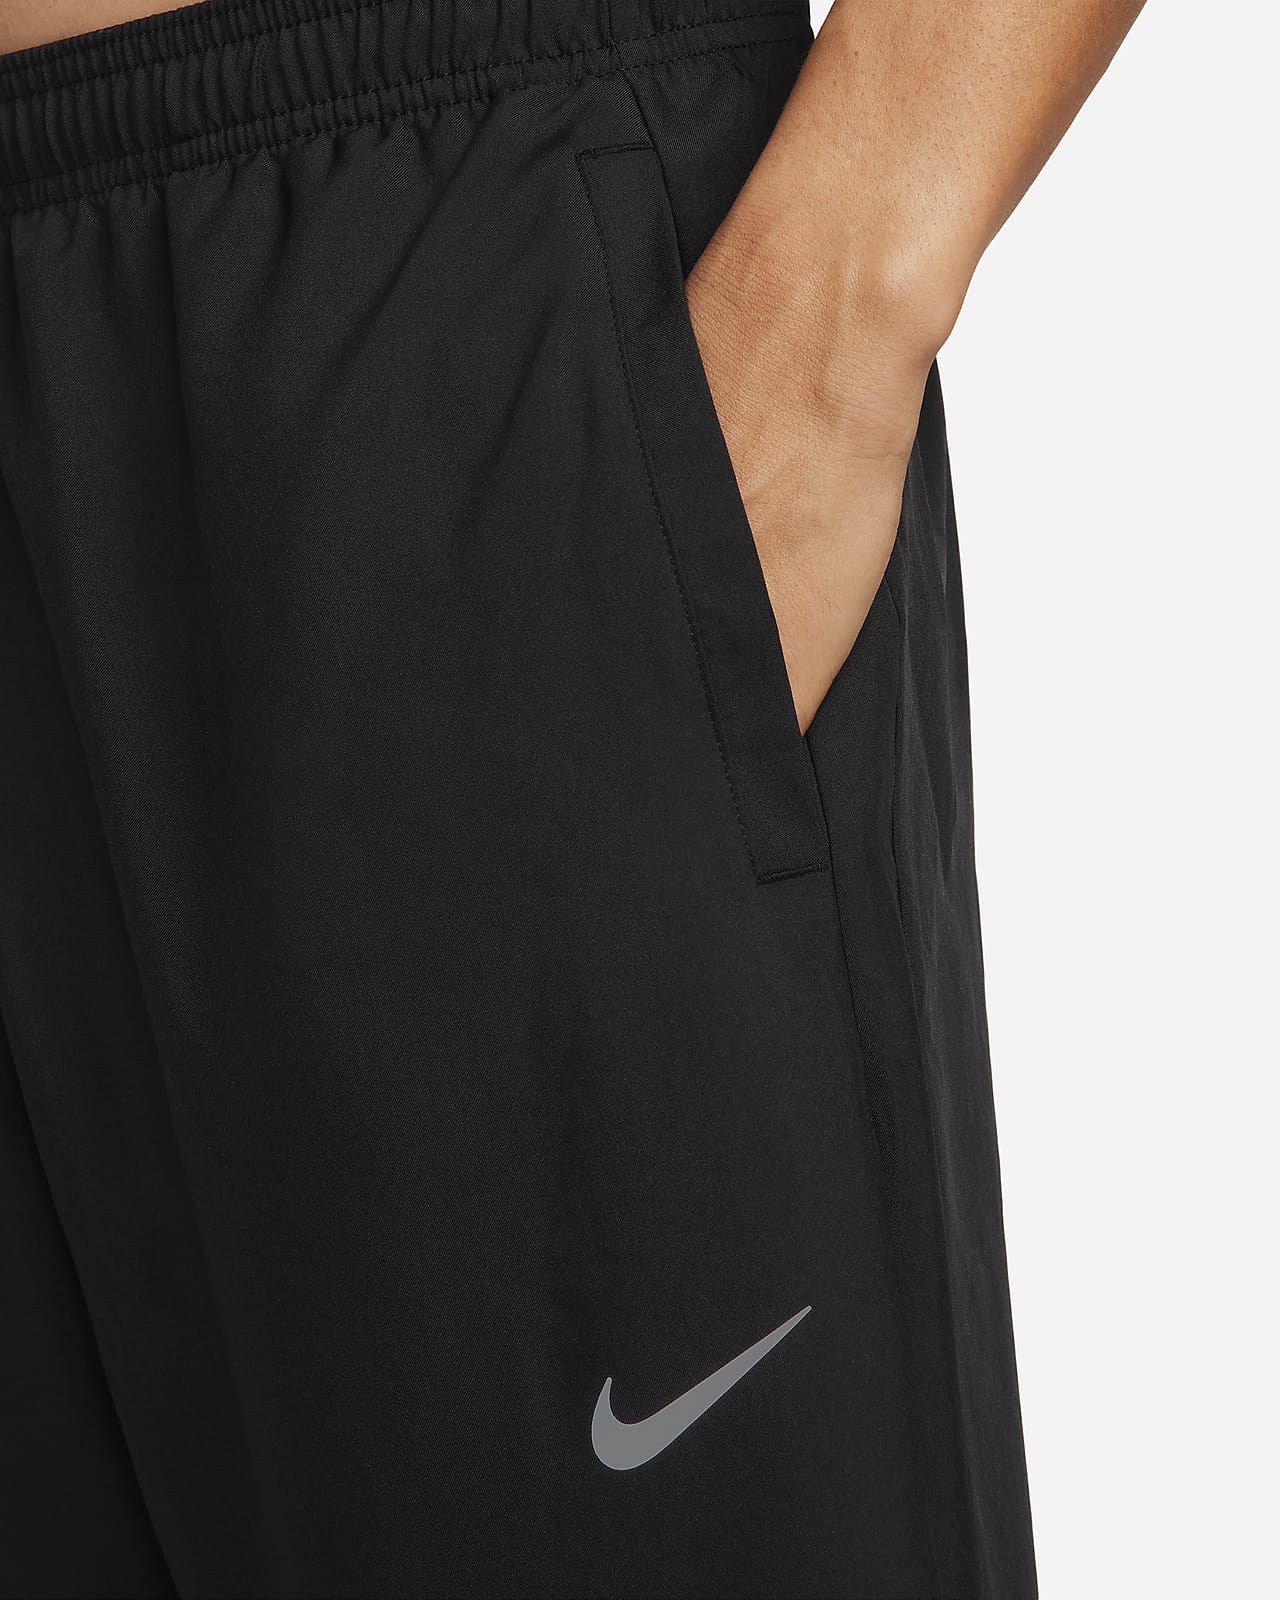 Nike Dri-FIT Run Division Challenger Woven Running Pants Men